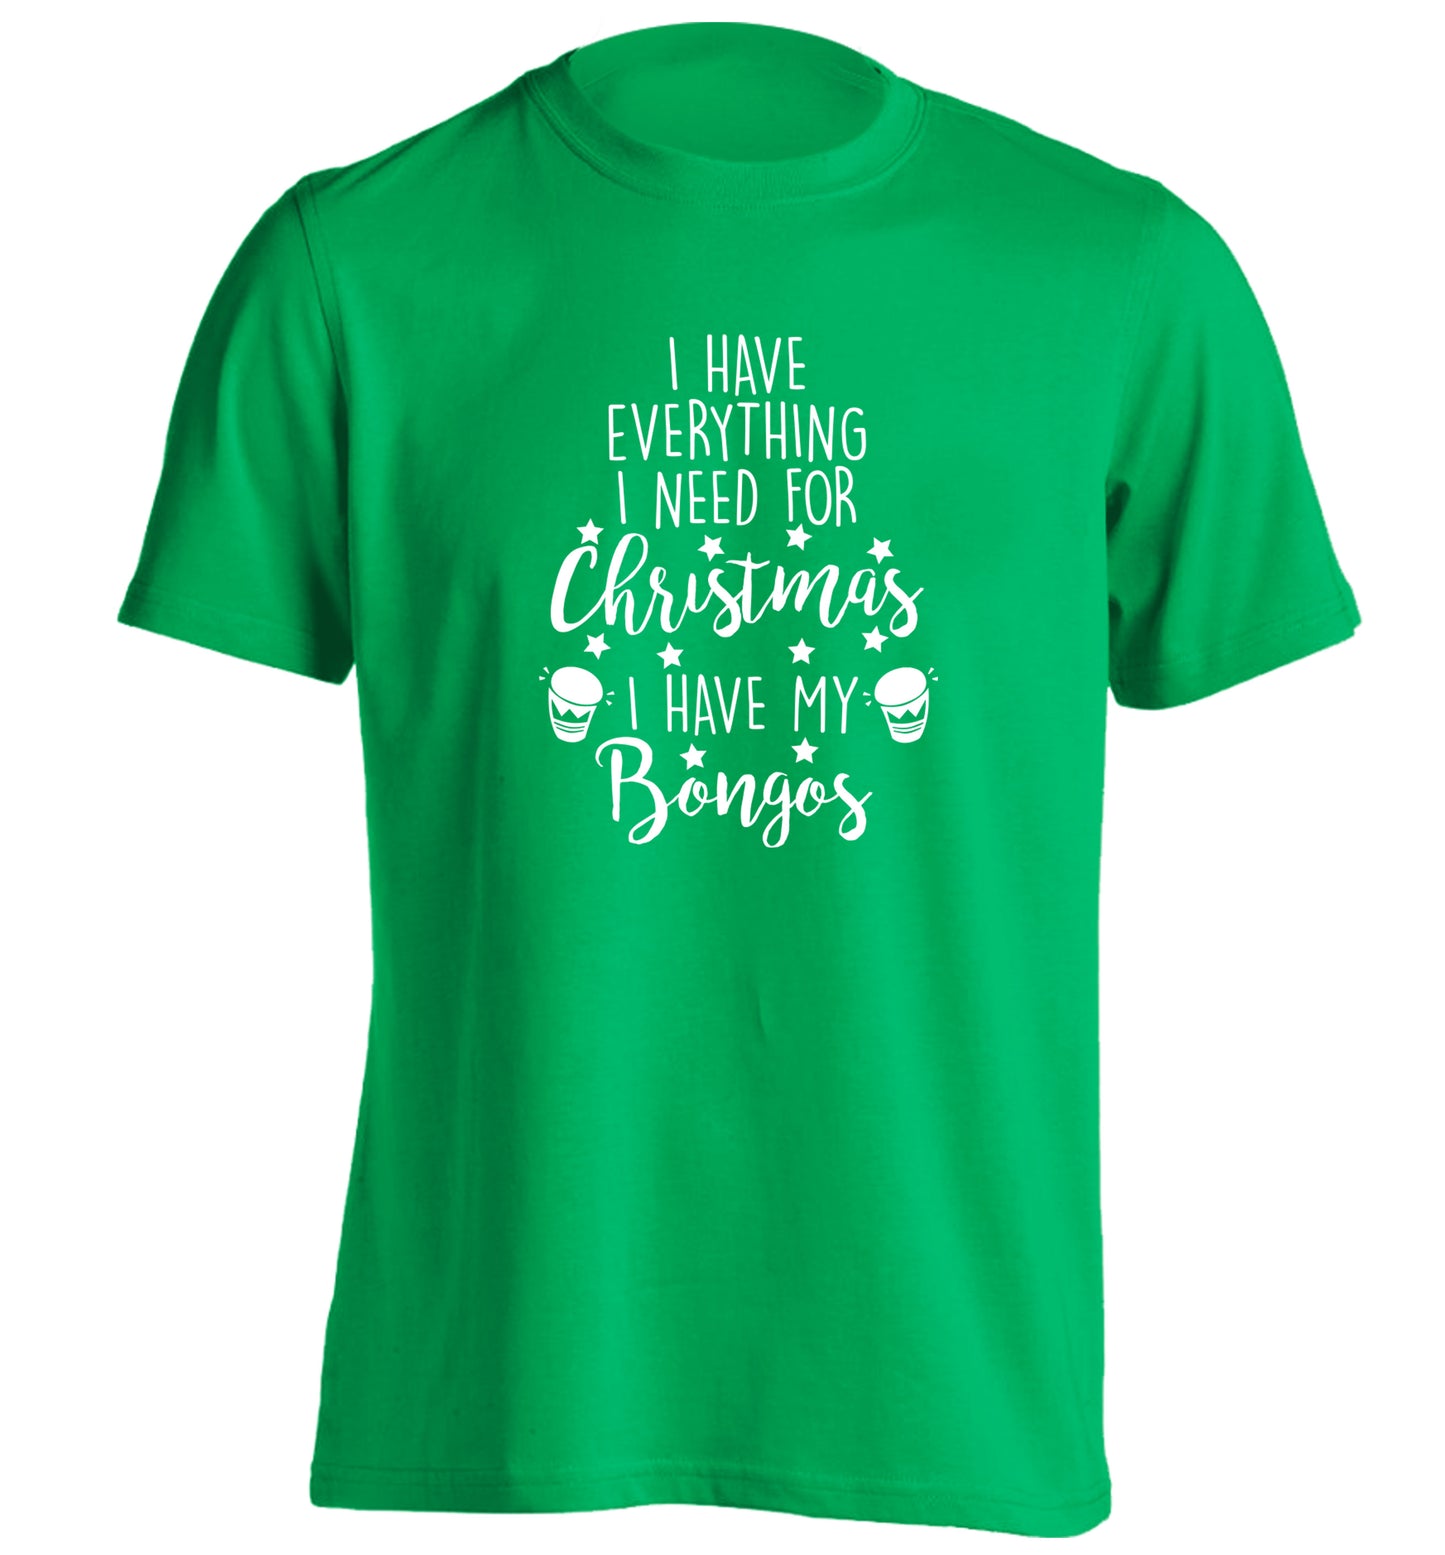 I have everything I need for Christmas I have my bongos! adults unisex green Tshirt 2XL